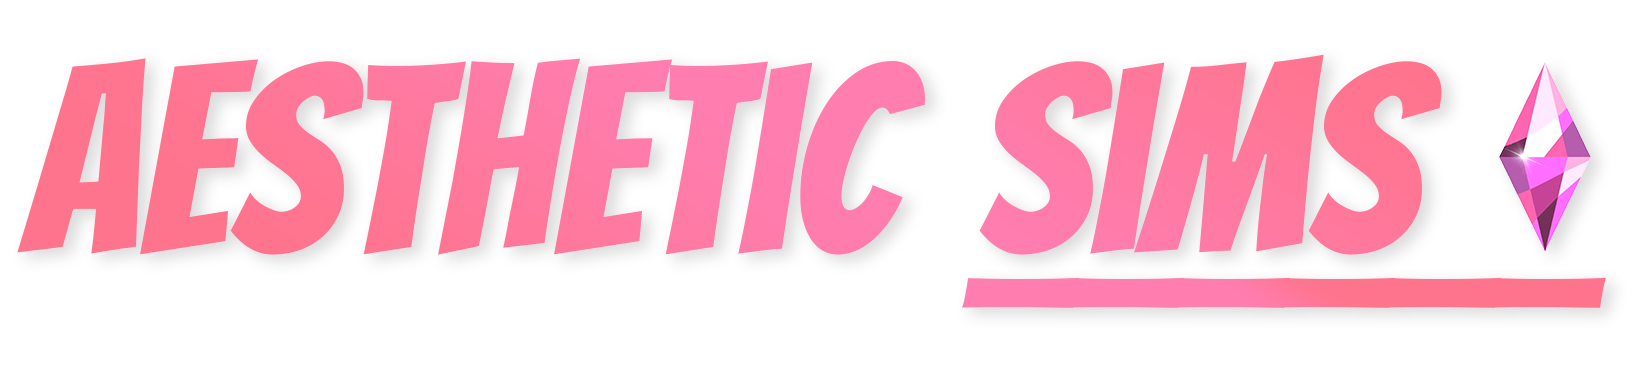 Aesthetic Sims logo